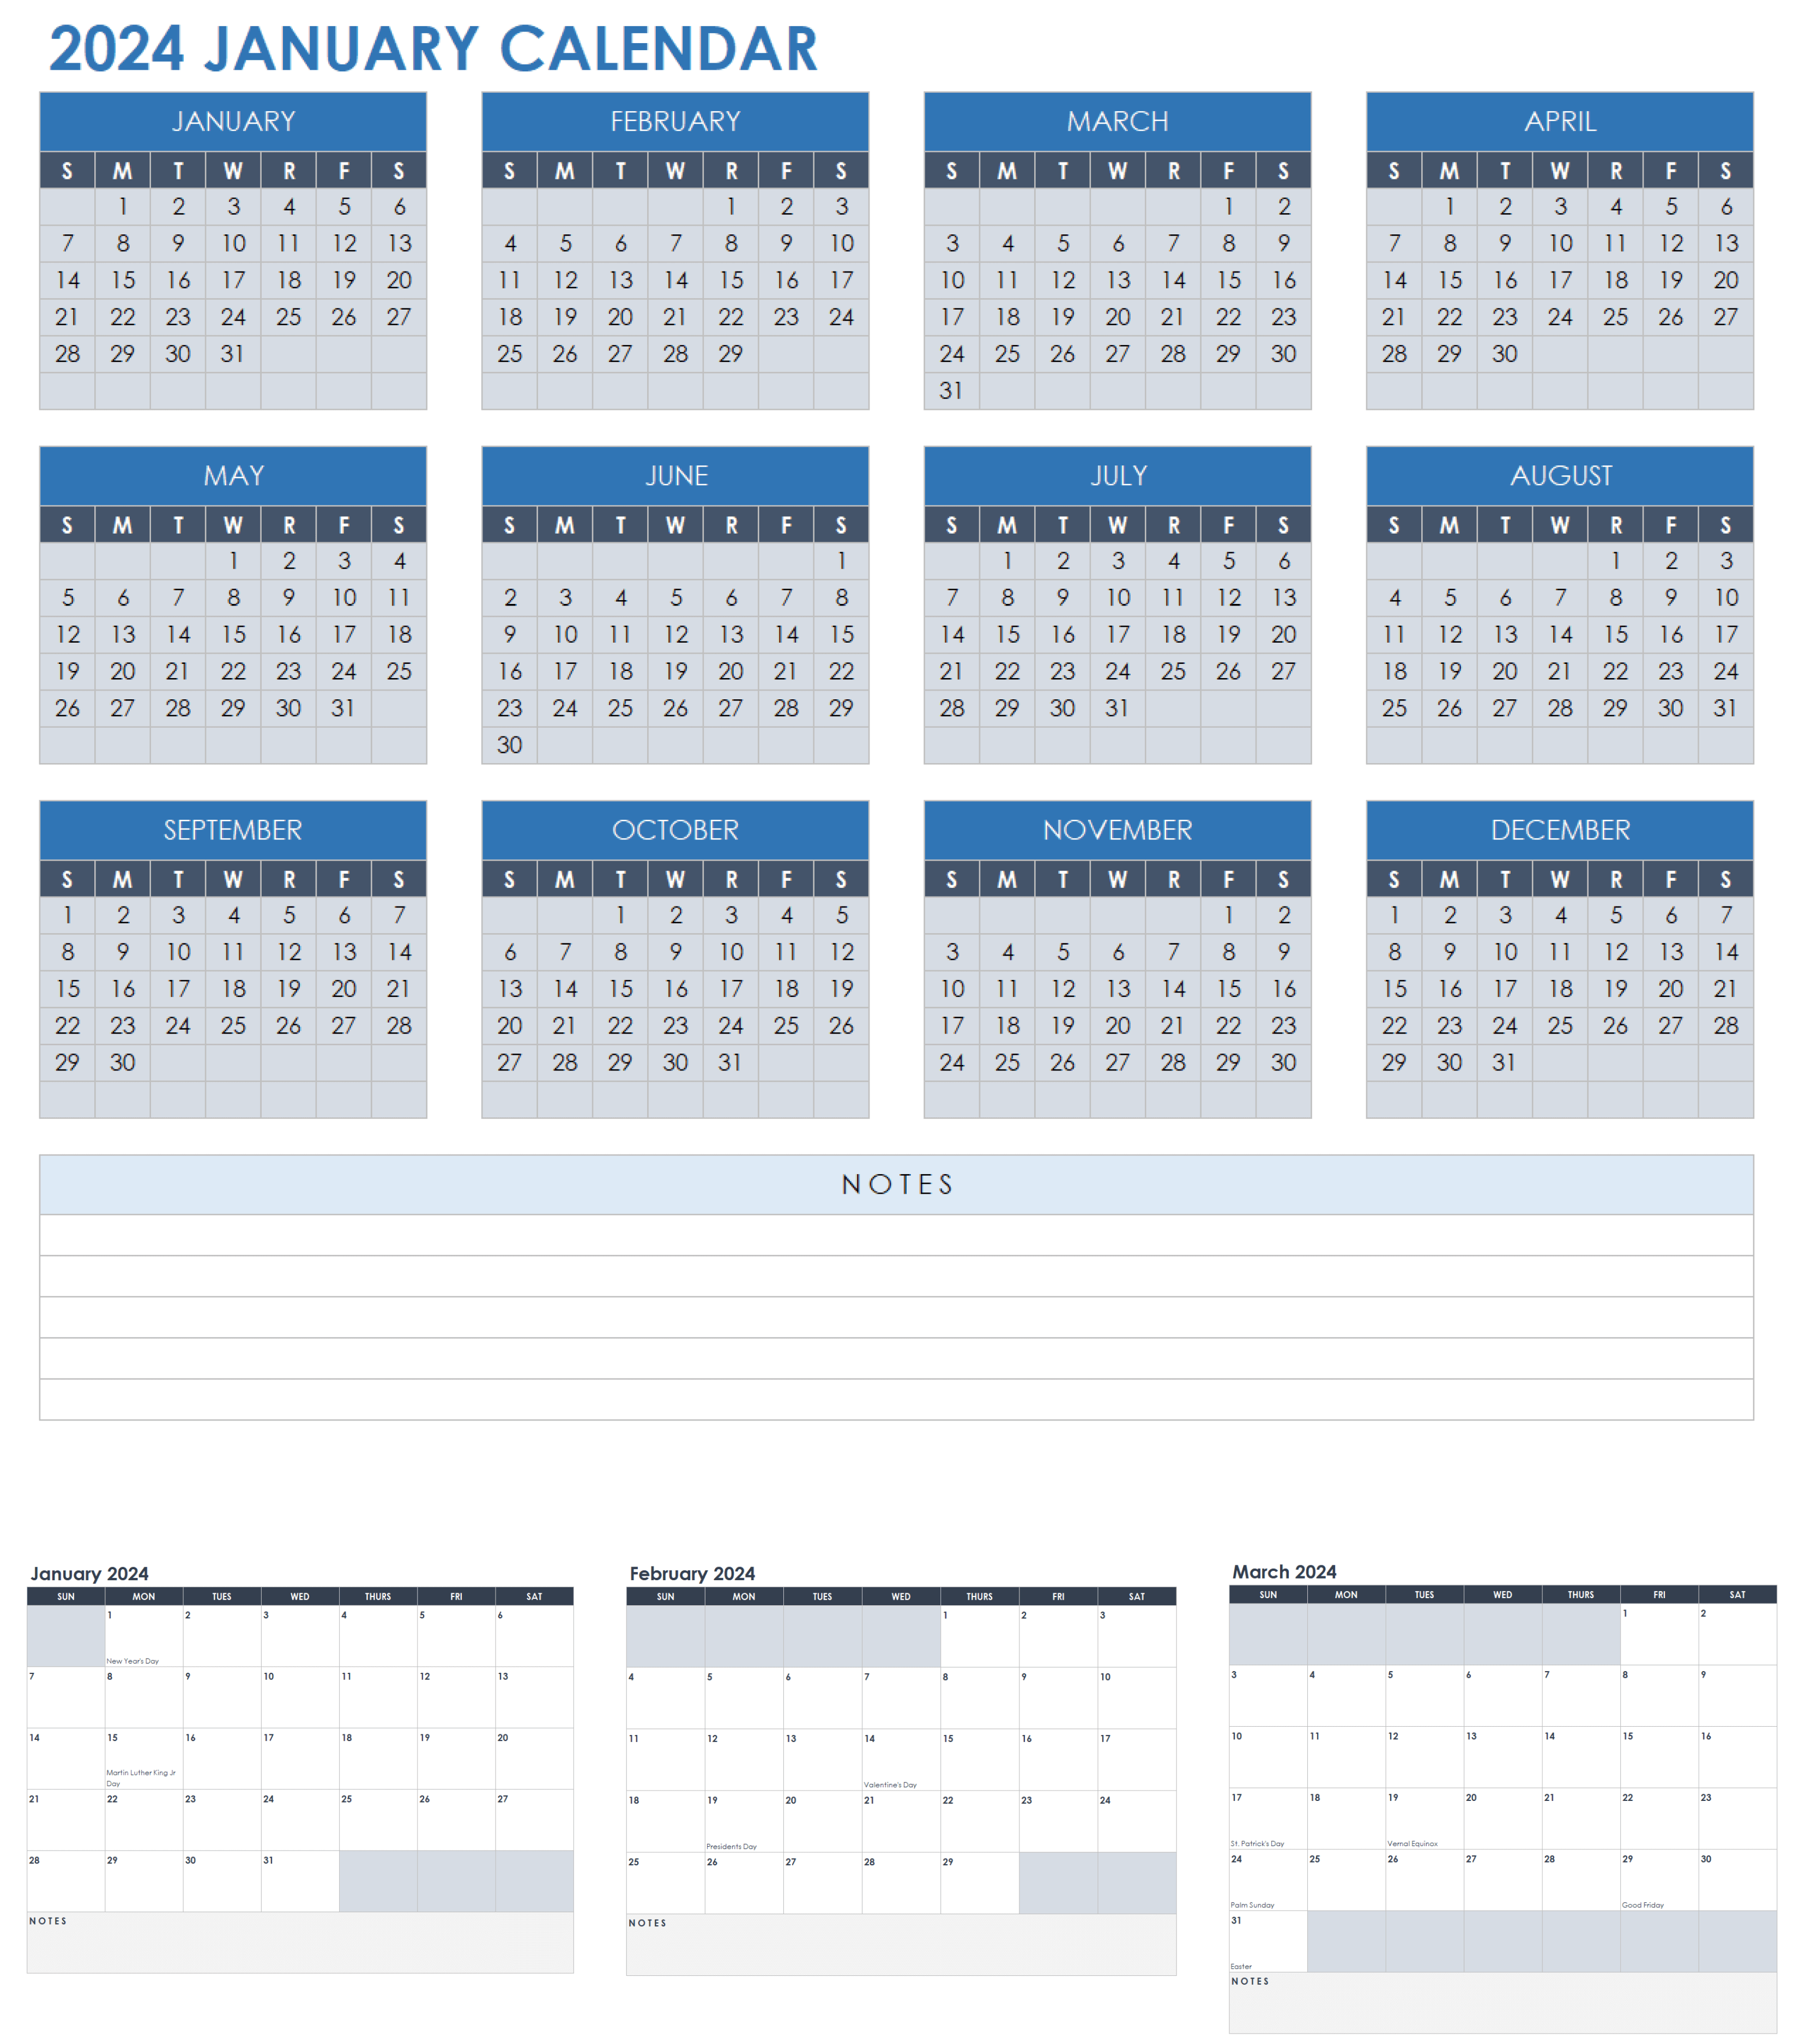 2024 January Calendar